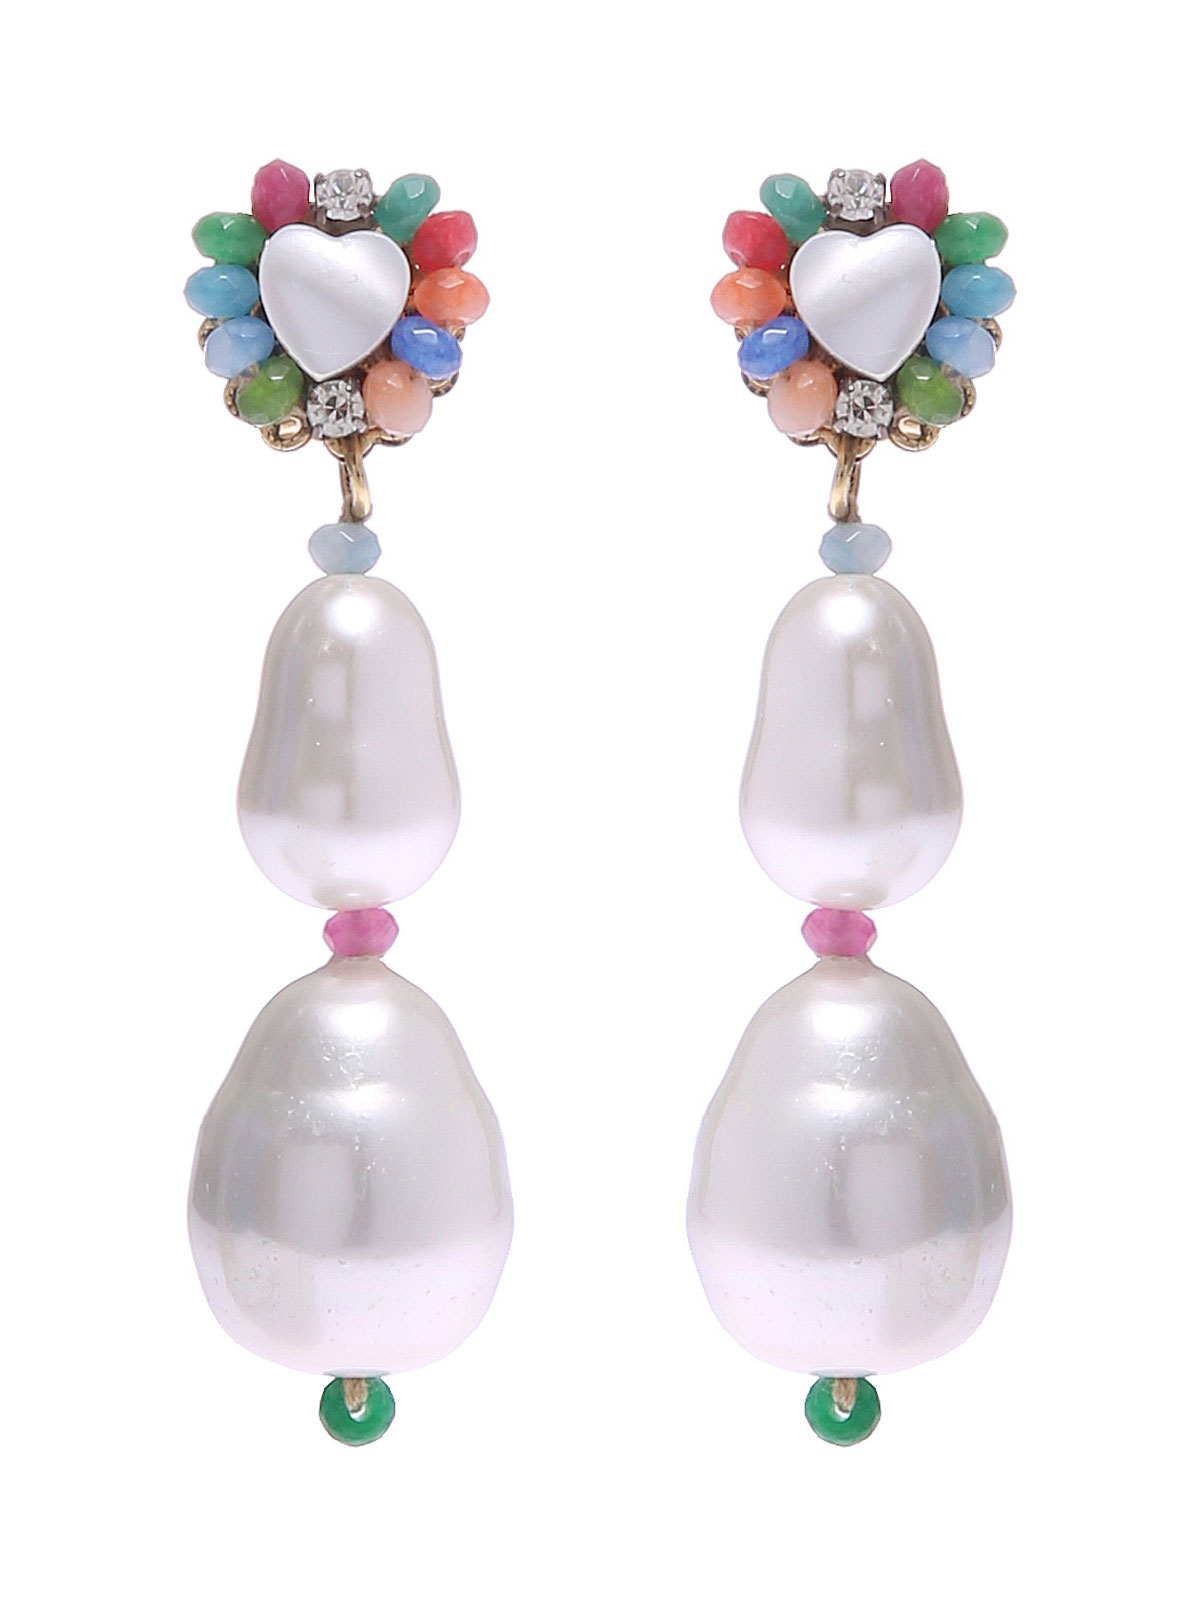 Jade earrings and motherofpearl heart stone